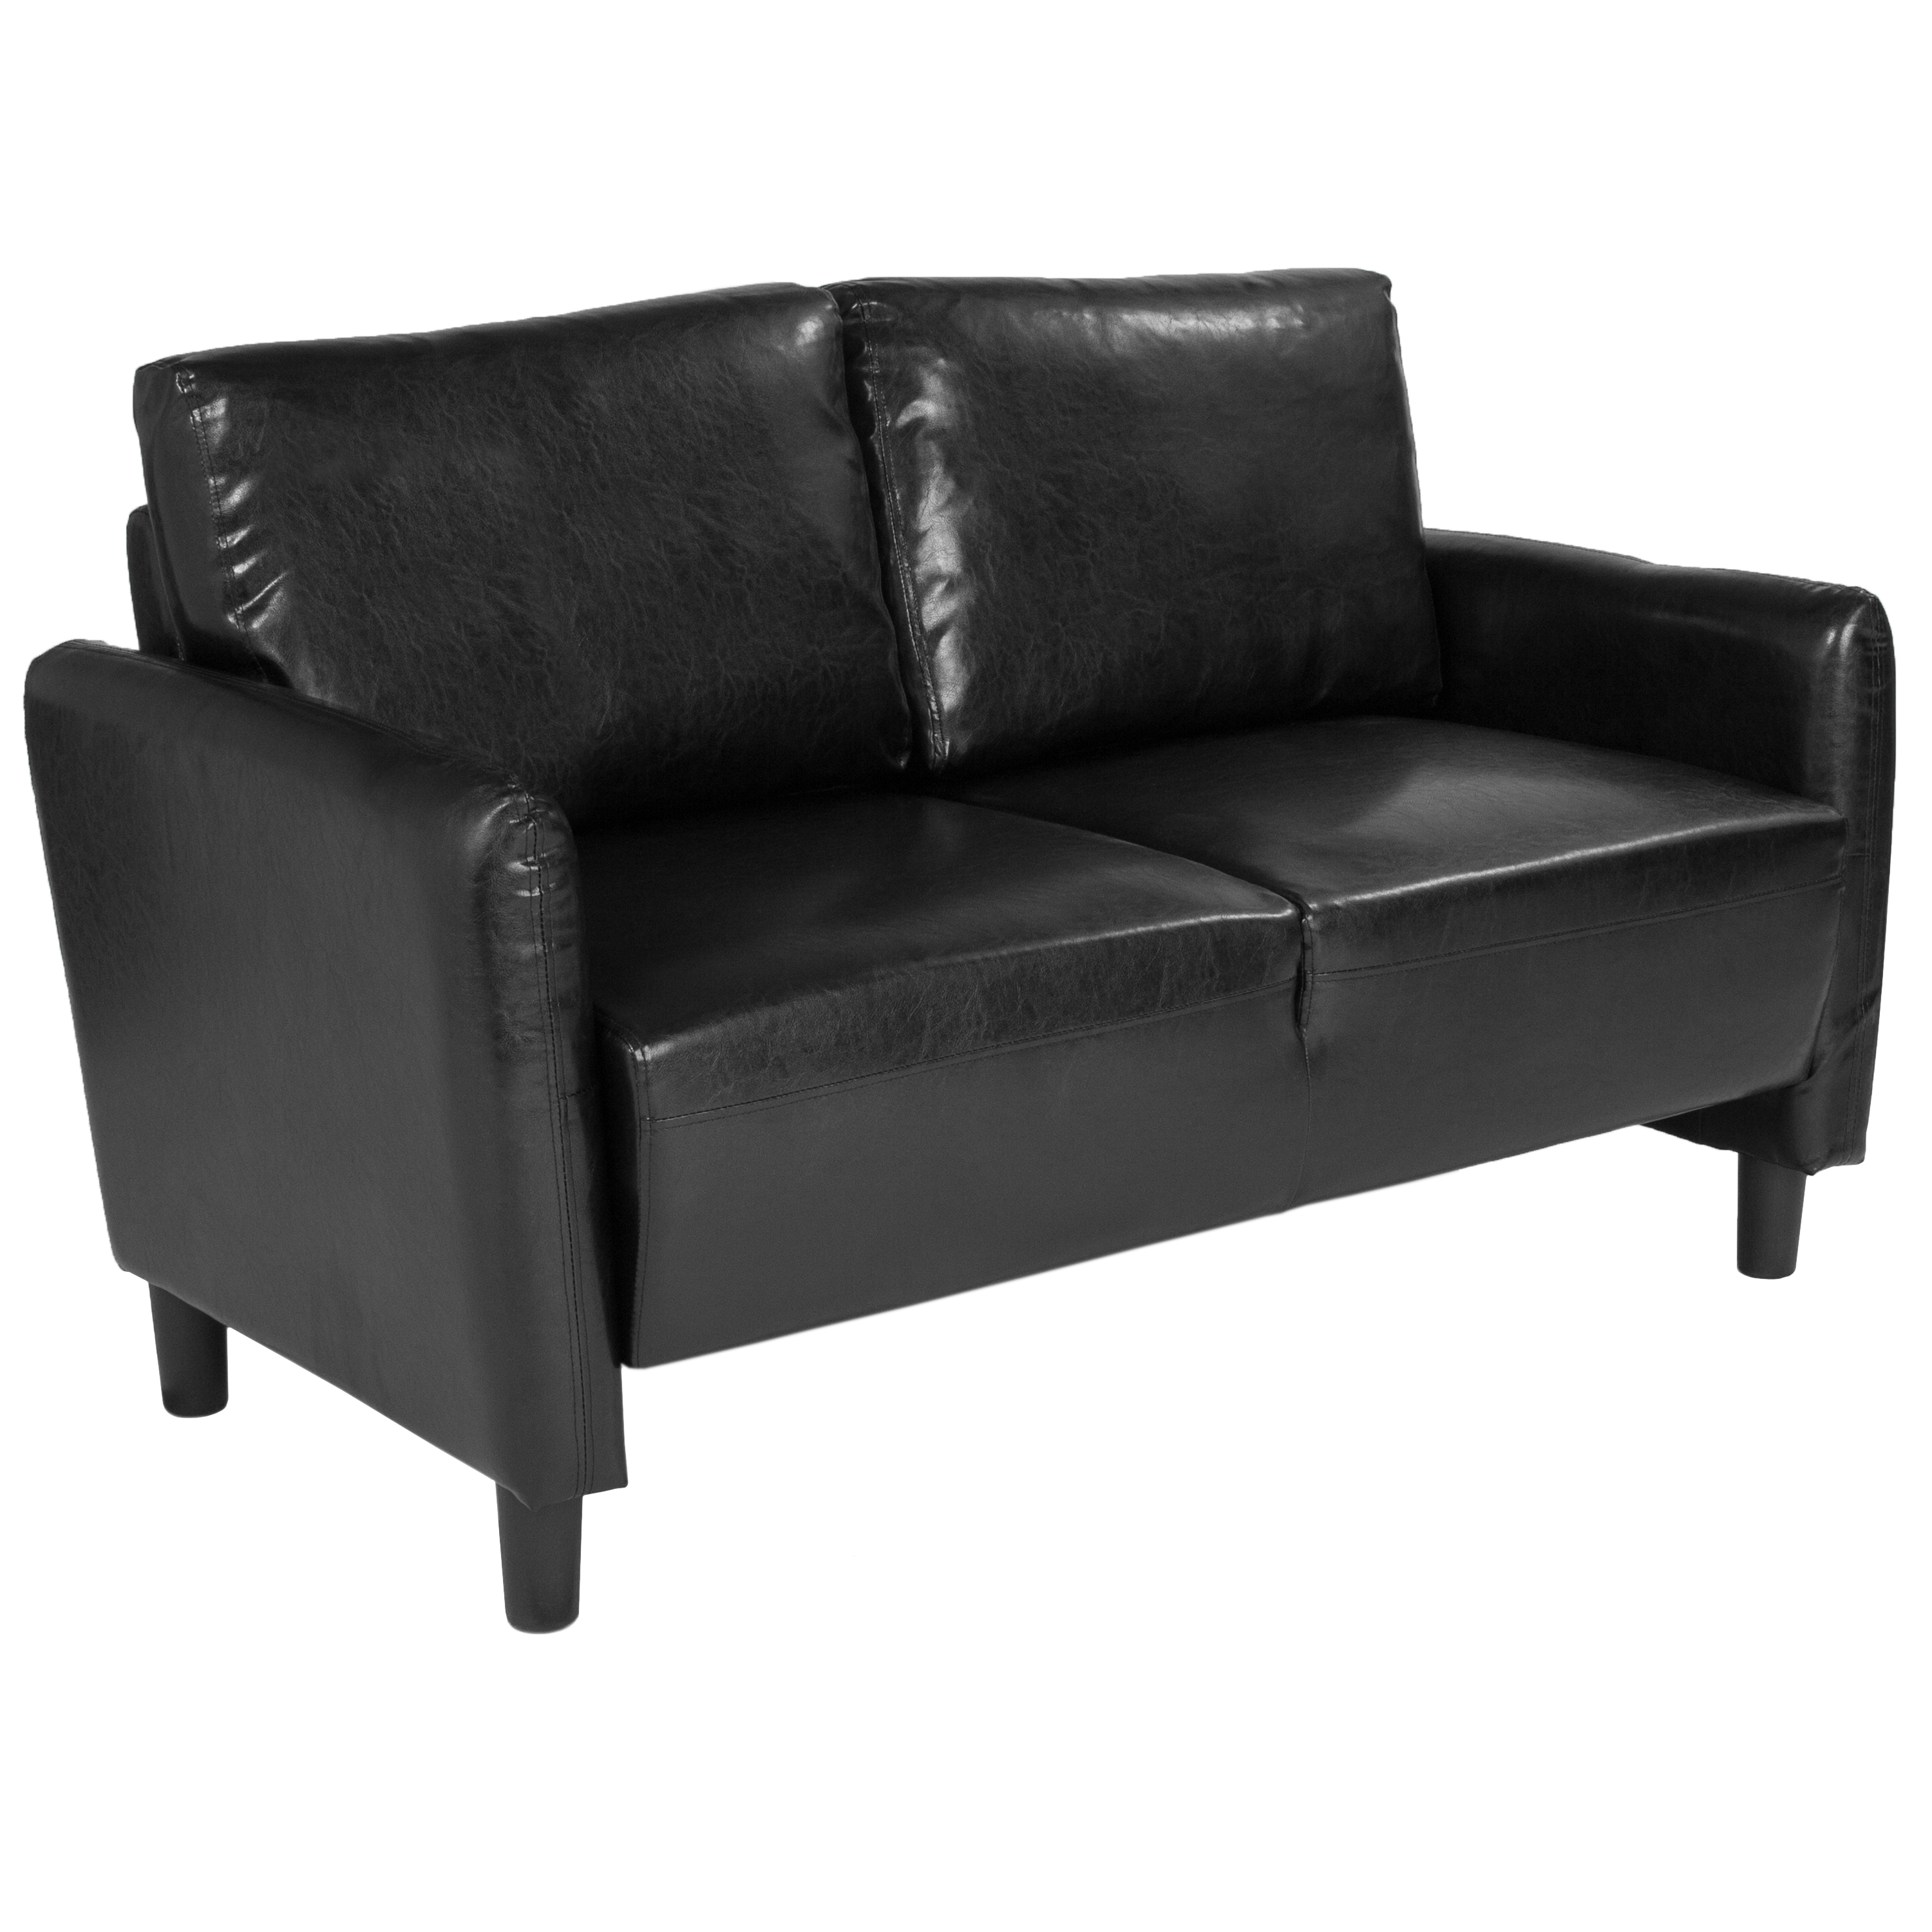 Flash Furniture Candler Park Upholstered Loveseat in Black LeatherSoft - image 1 of 5